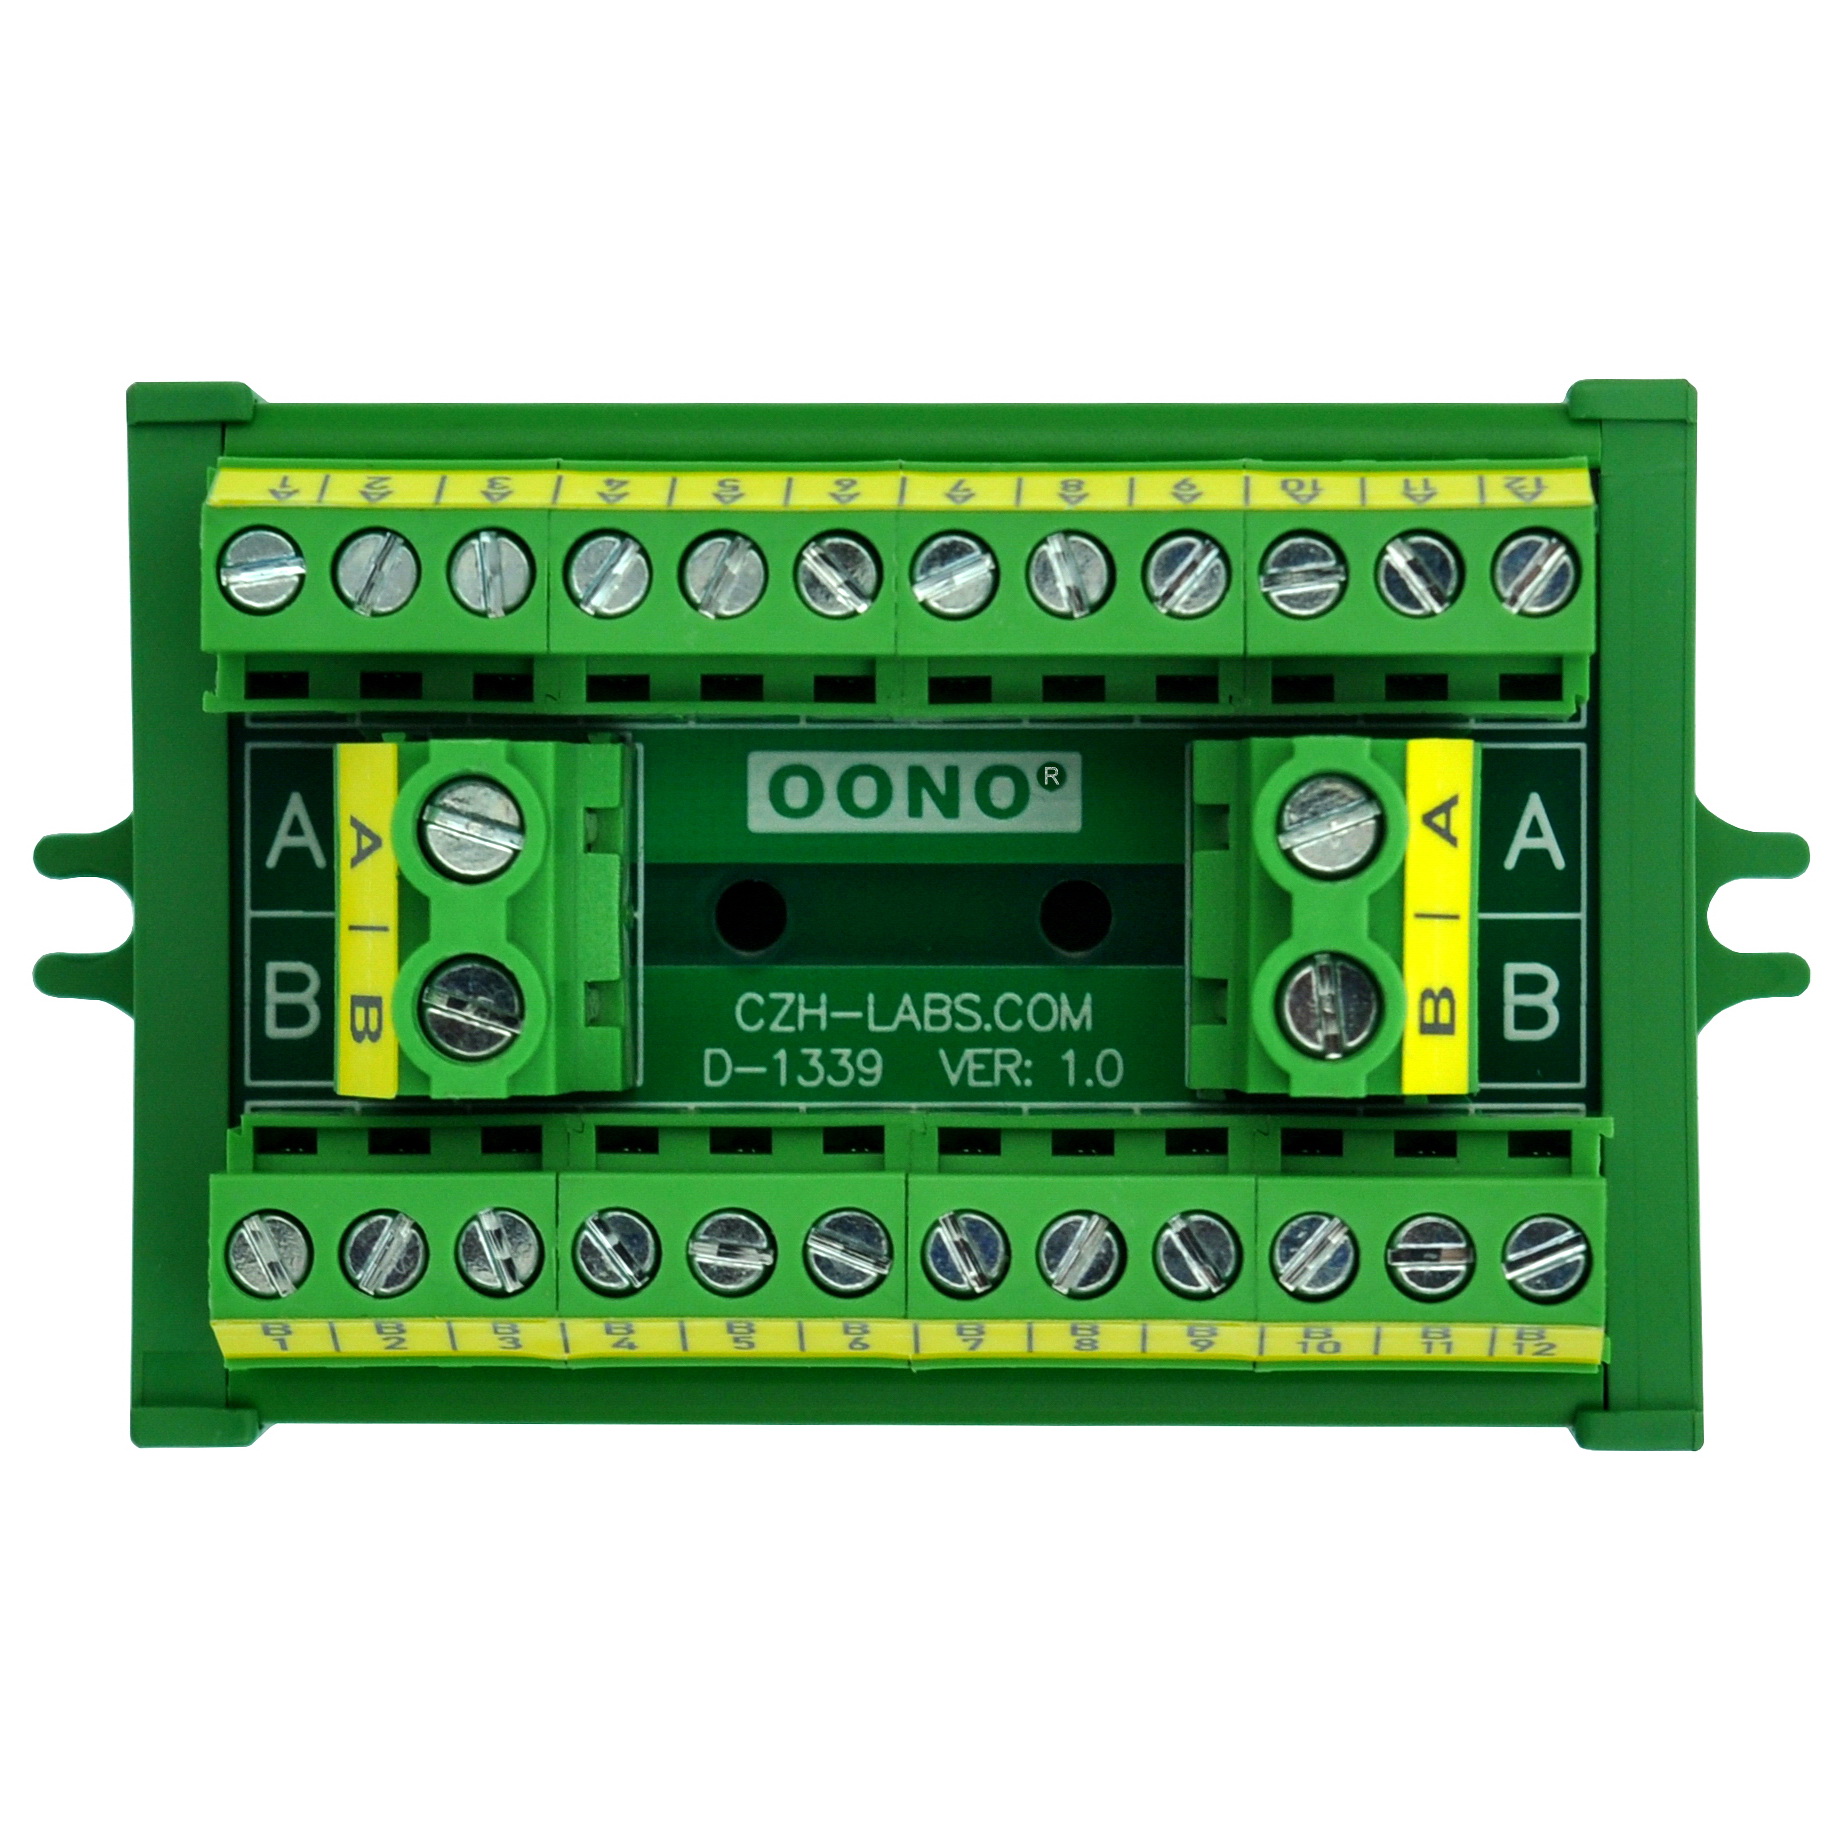 IDC14 14-Pin Connector Signals Breakout Board Screw terminals Din 